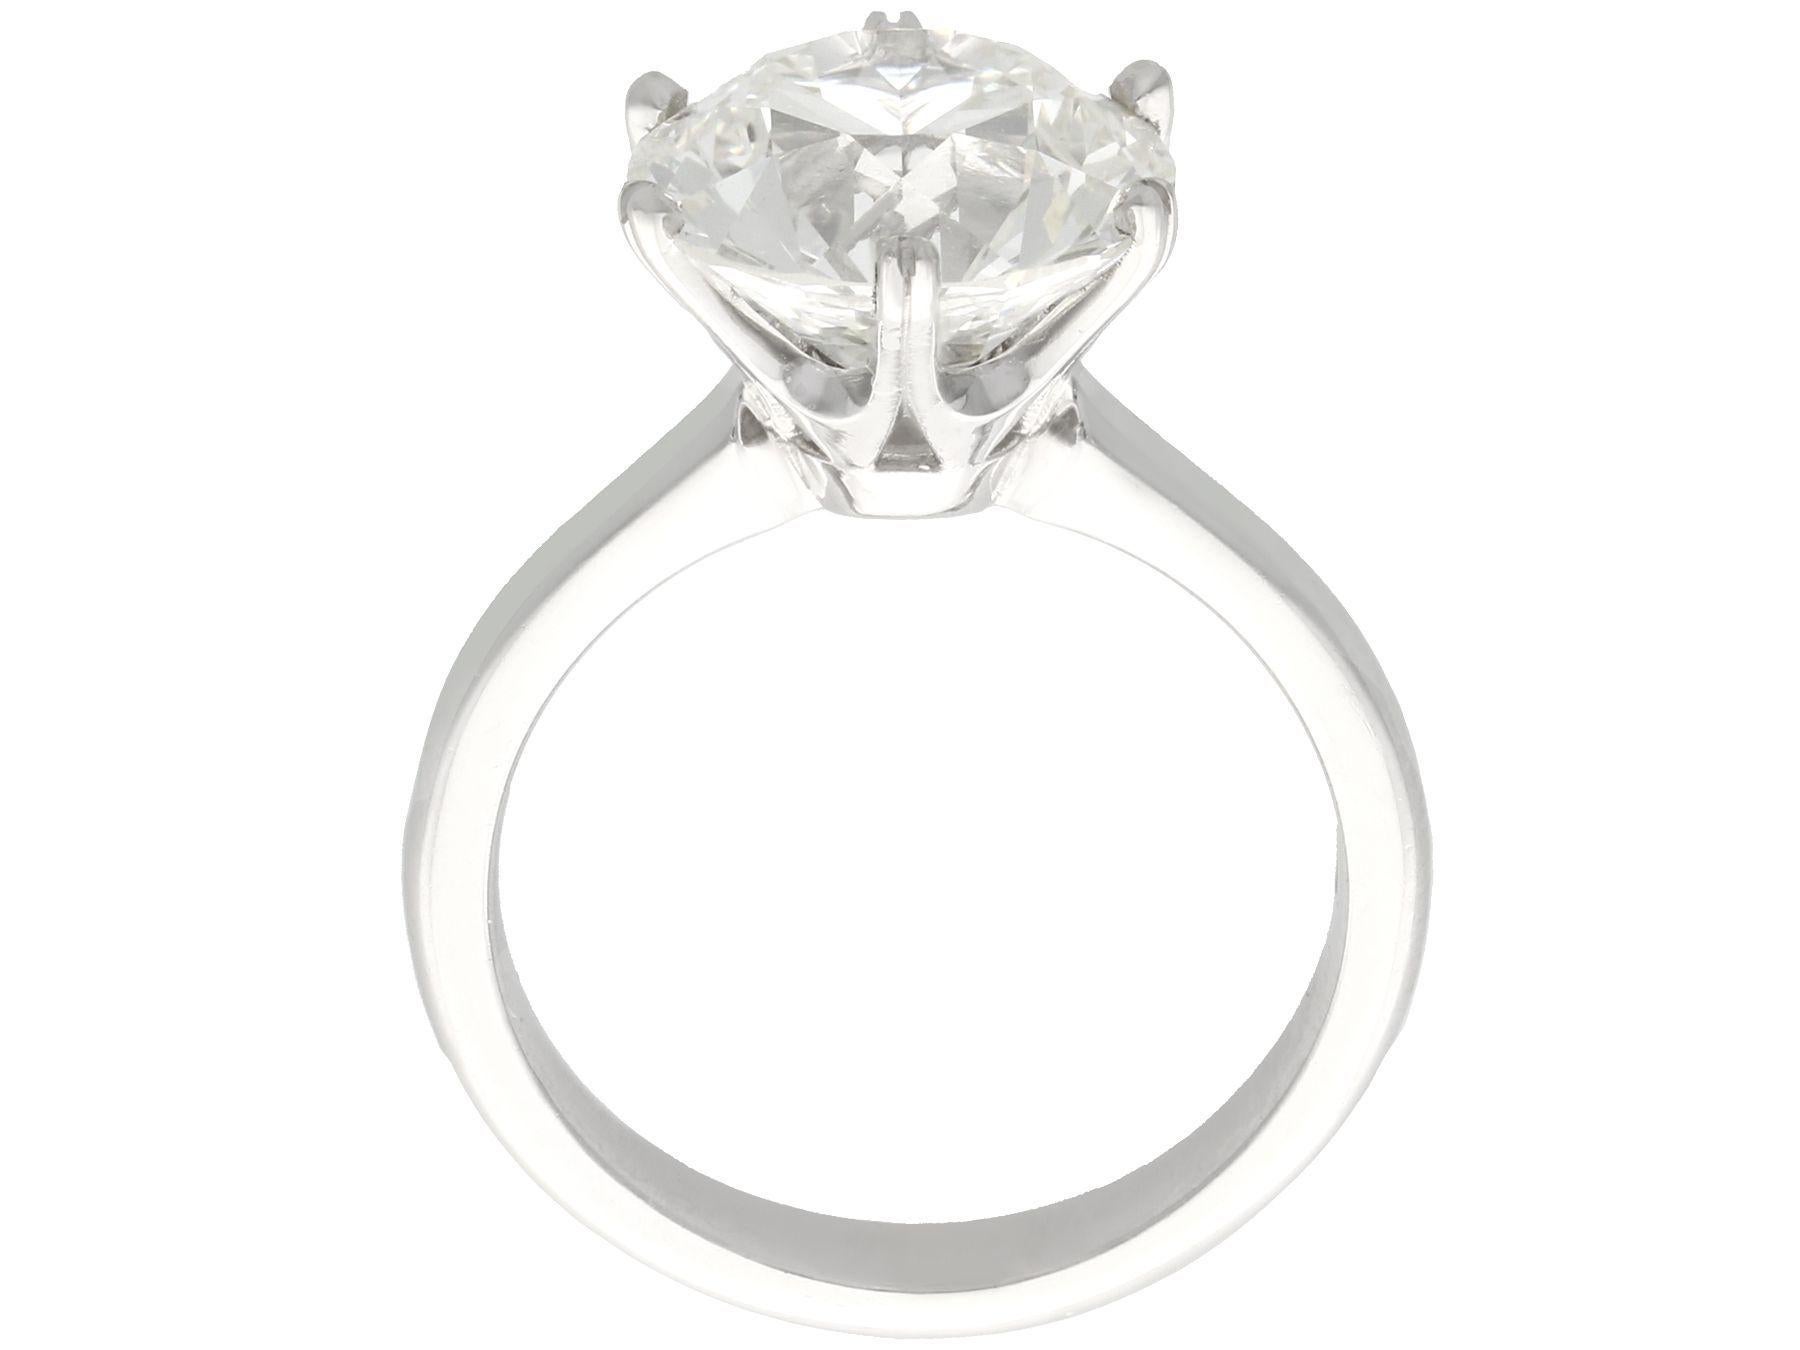 Contemporary 4.89 Carat Diamond Solitaire Engagement Ring in Platinum For Sale